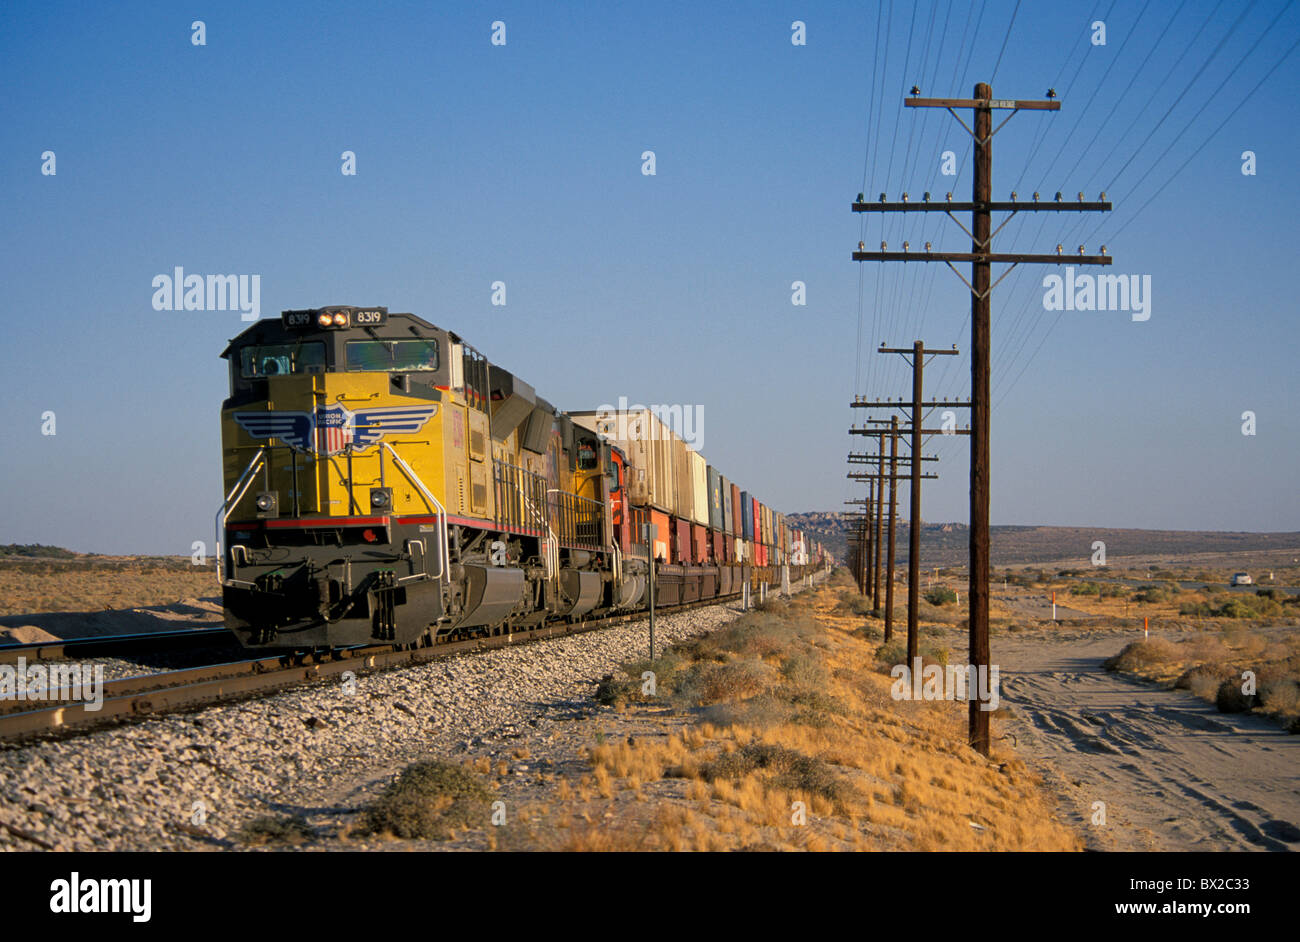 Tren de mercancías por carretera de carga ferroviaria de transporte de mercancías tren de mercancías ferrocarril locomotora diesel prairie paisaje Foto de stock